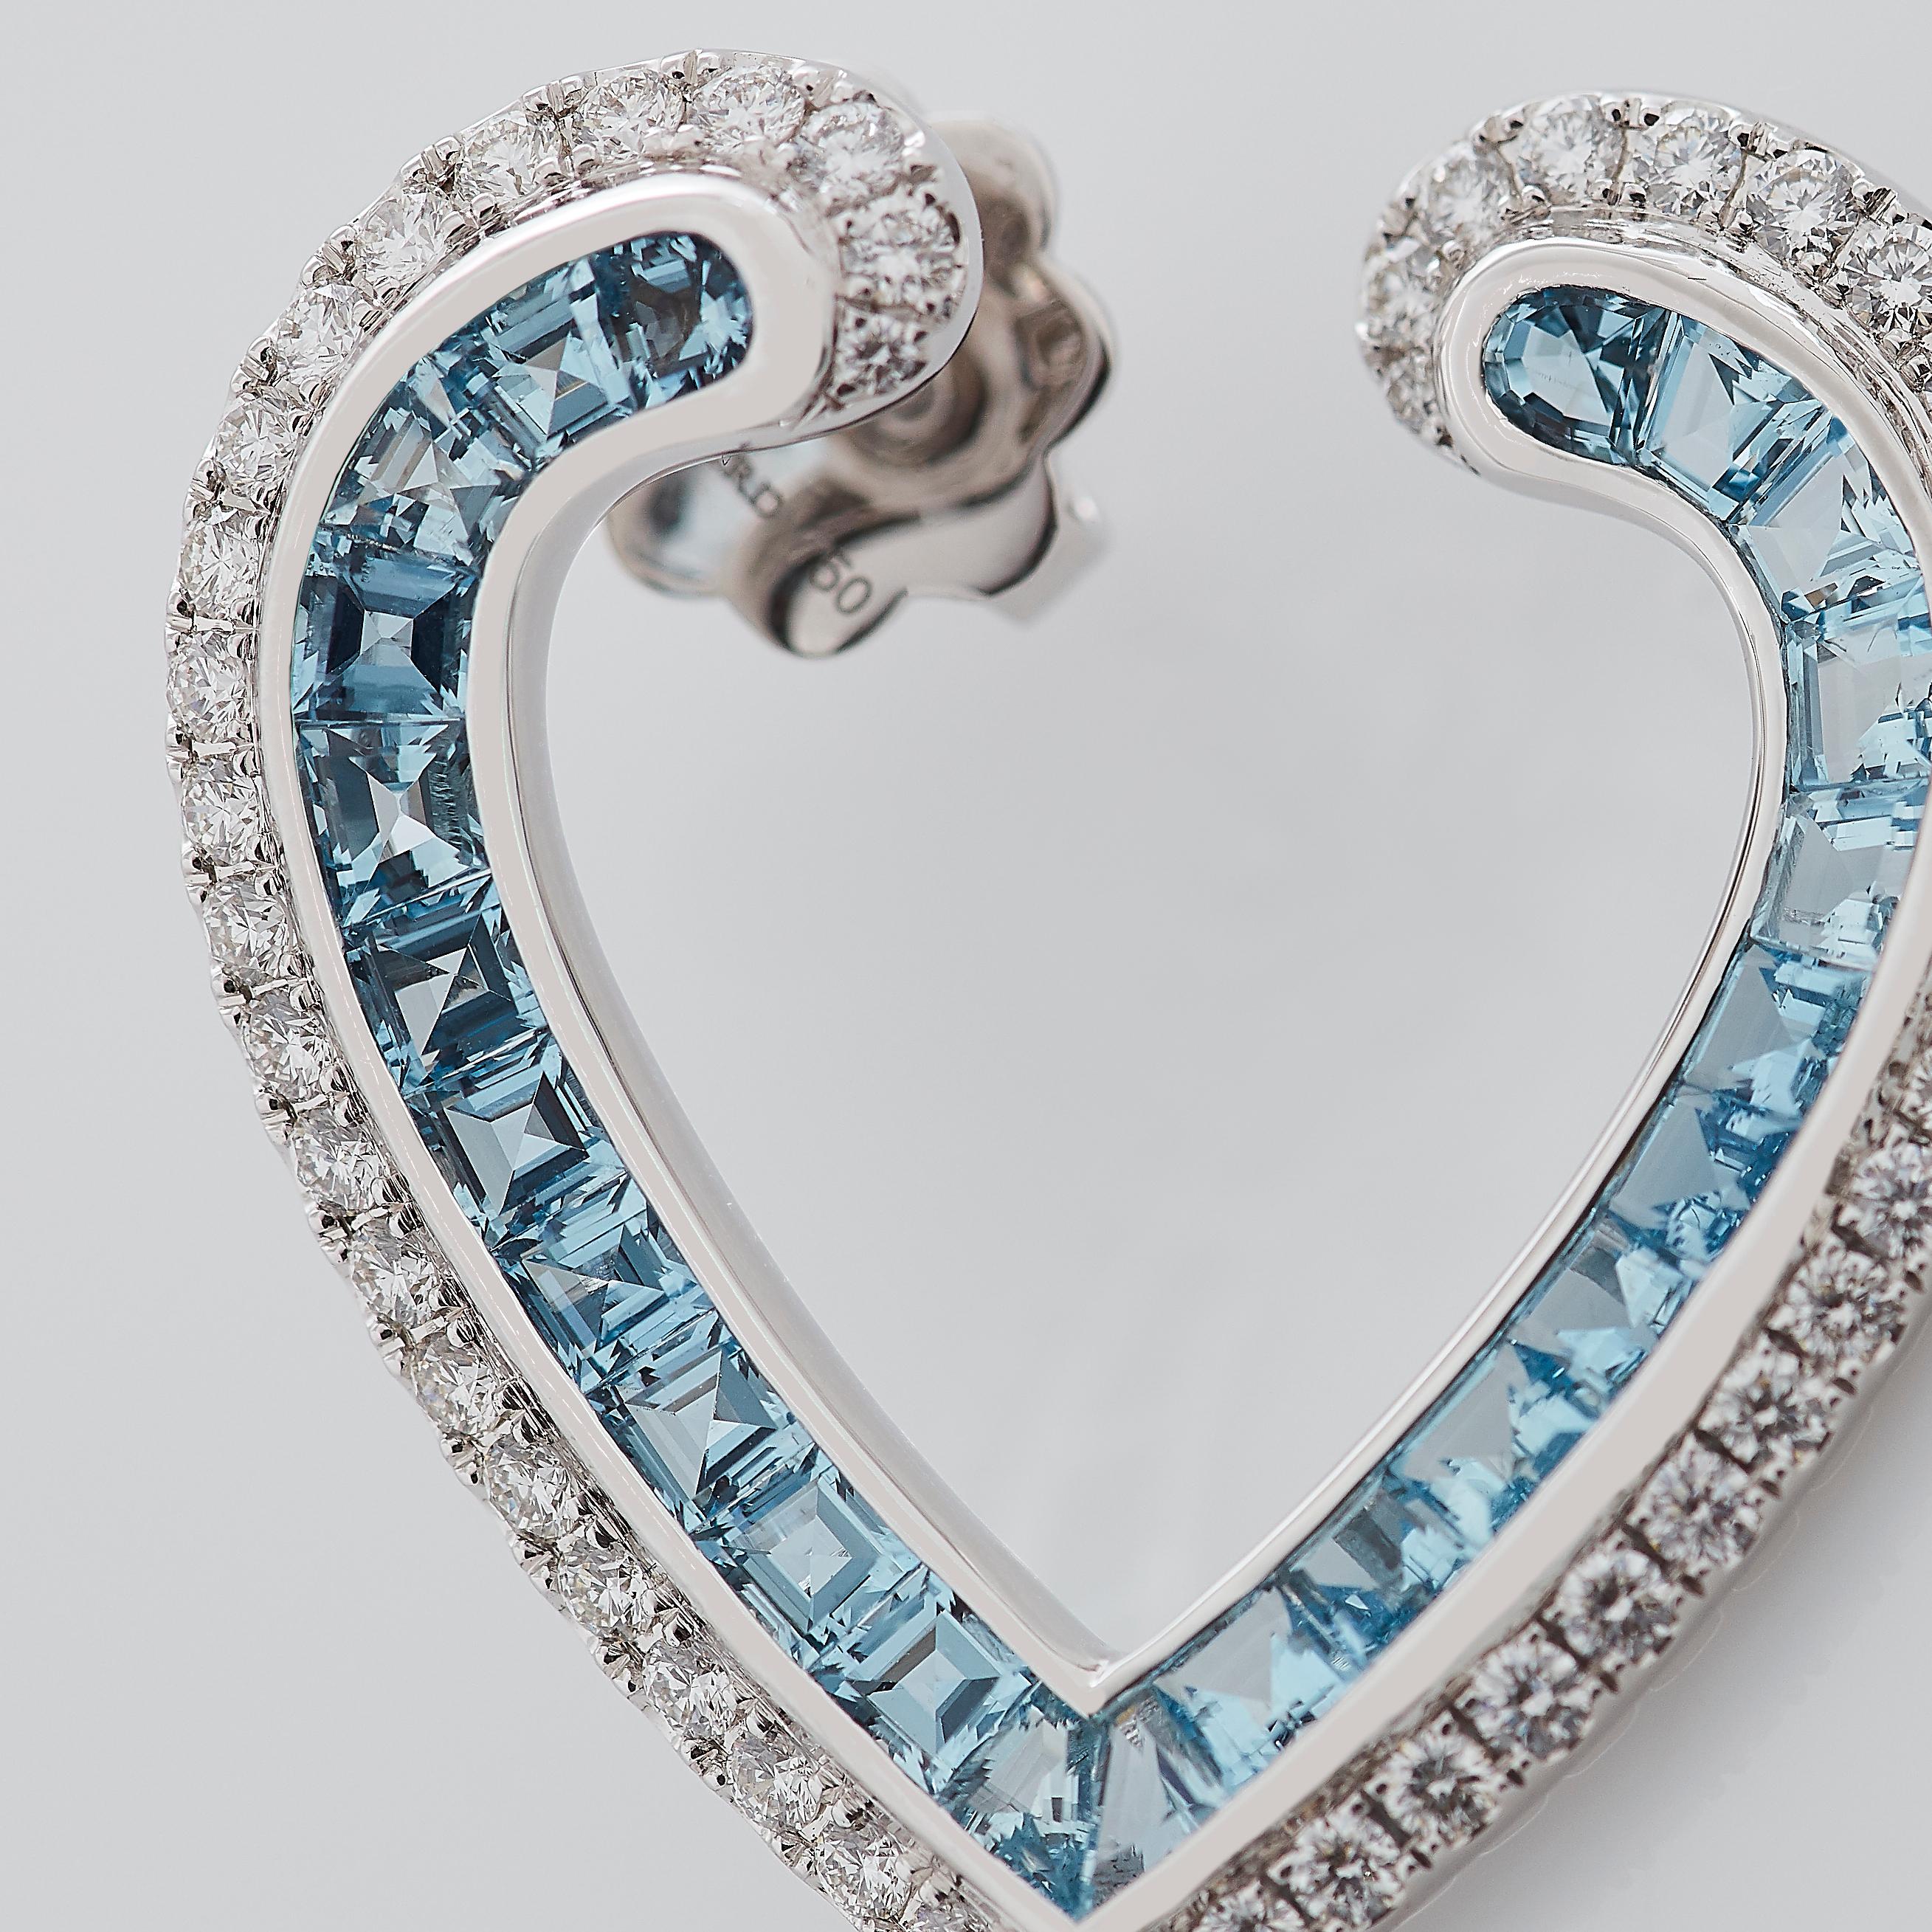 Garrard 'Aloria' 18 Karat White Gold Calibre Cut Aquamarine Diamond Earrings For Sale 1